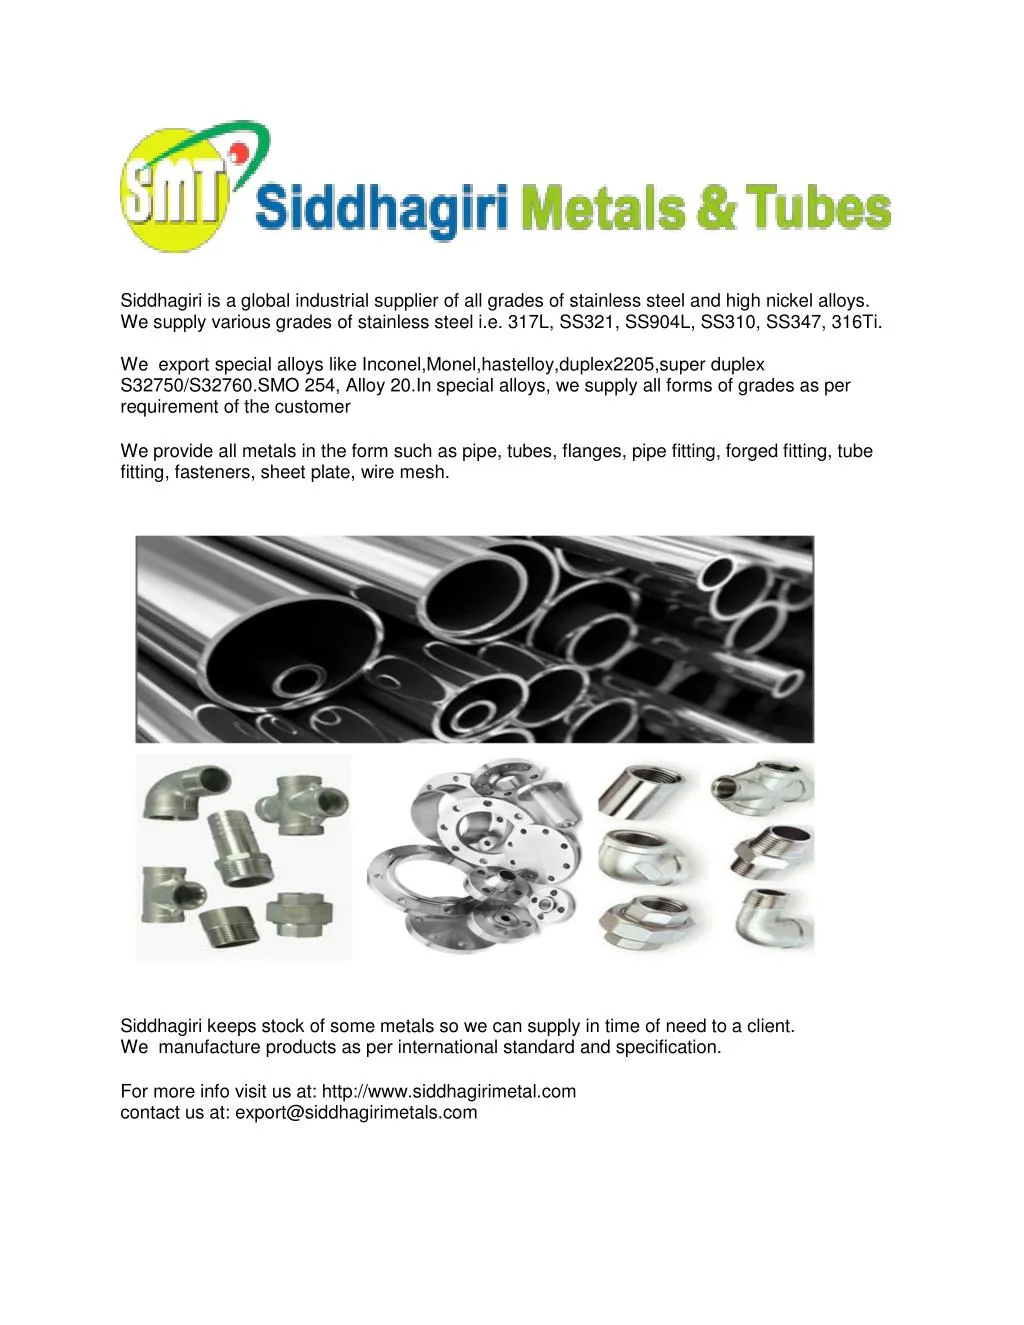 siddhagiri is a global industrial supplier